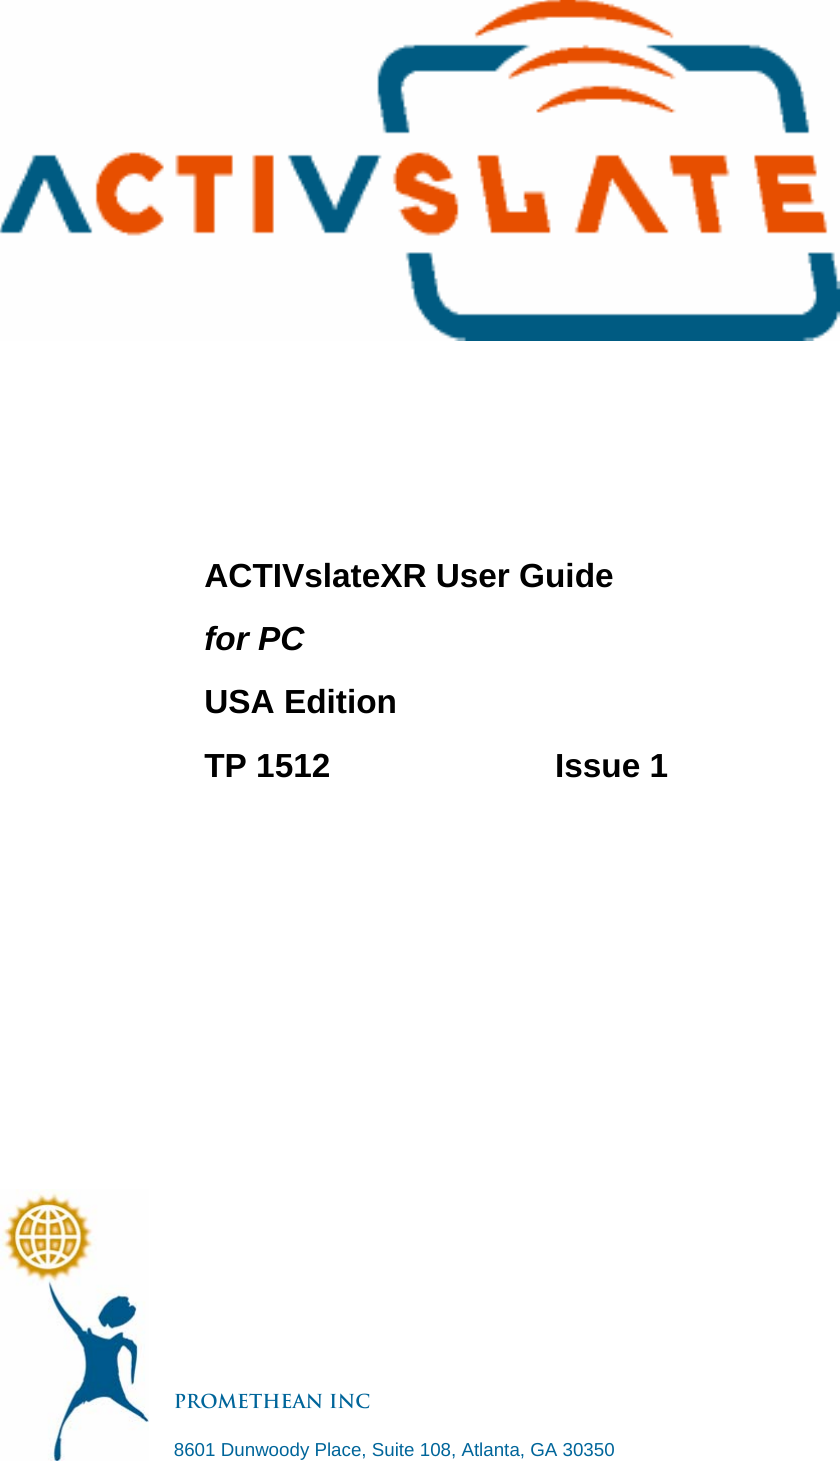   moljbqeb^k=fåÅ=8601 Dunwoody Place, Suite 108, Atlanta, GA 30350      ACTIVslateXR User Guide for PC USA Edition TP 1512  Issue 1 